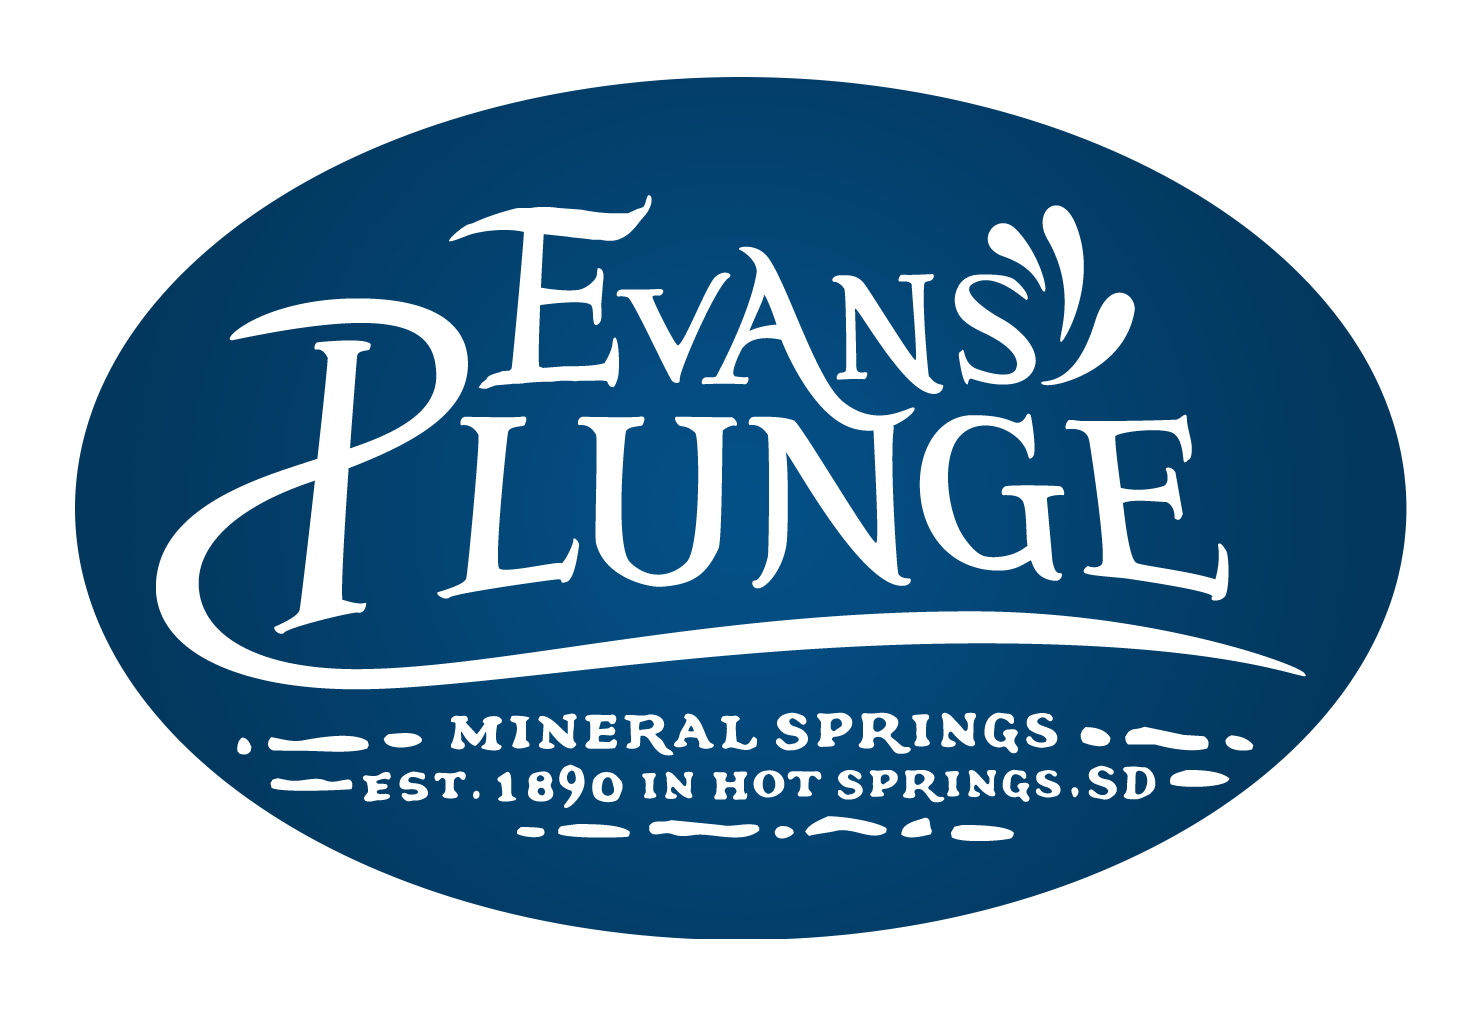 Evans Plunge logo